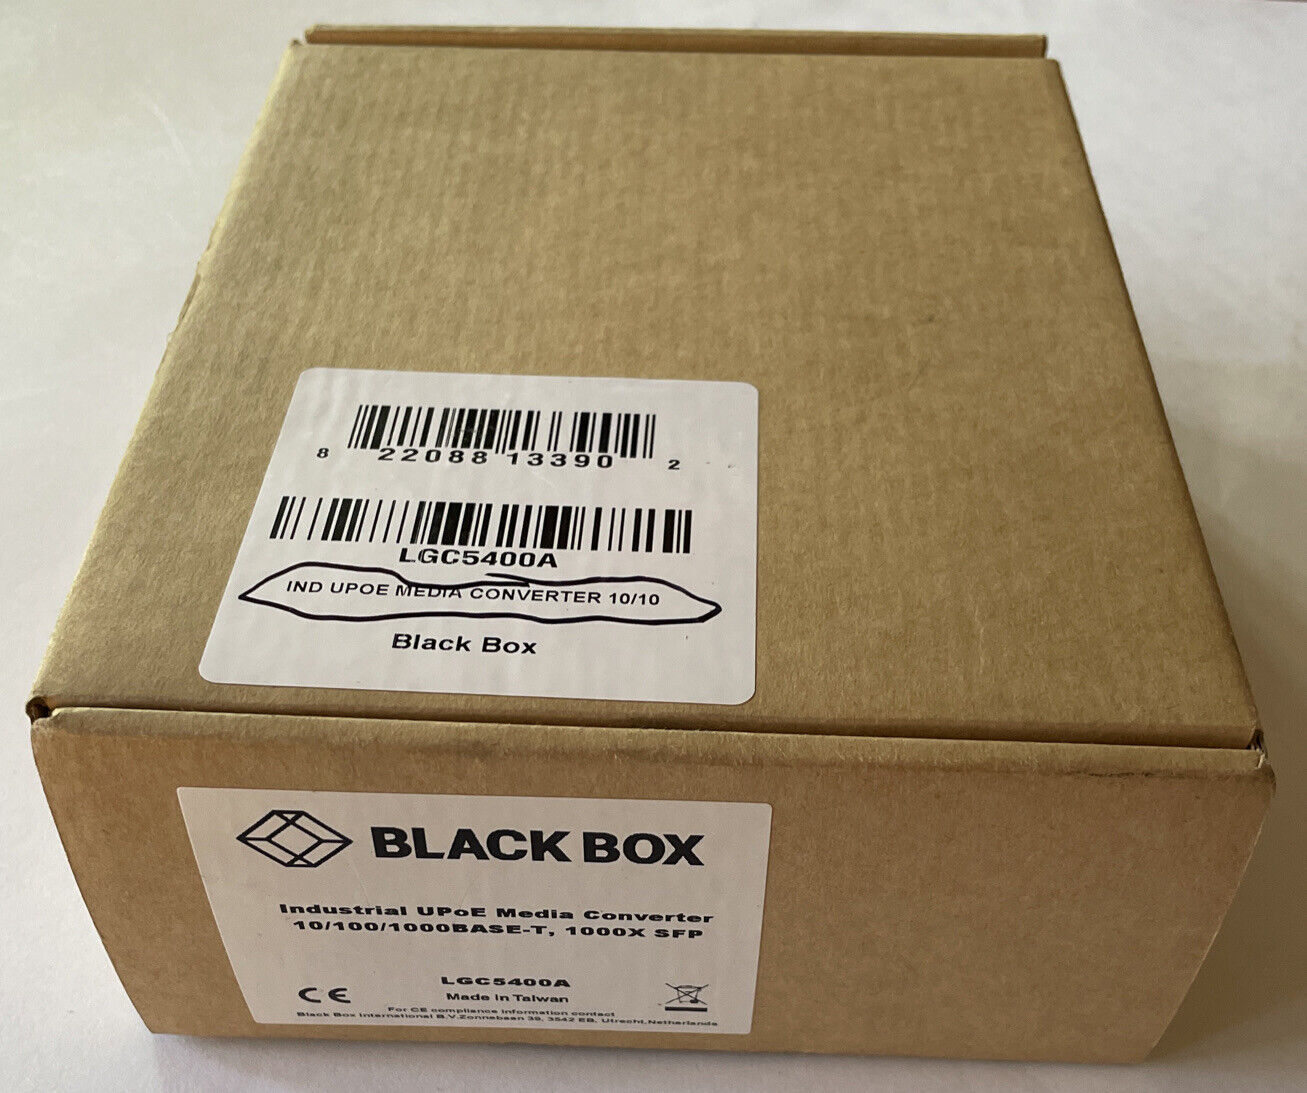 Black Box Media Converter with Terminal Block LGC5400A *BRAND NEW*